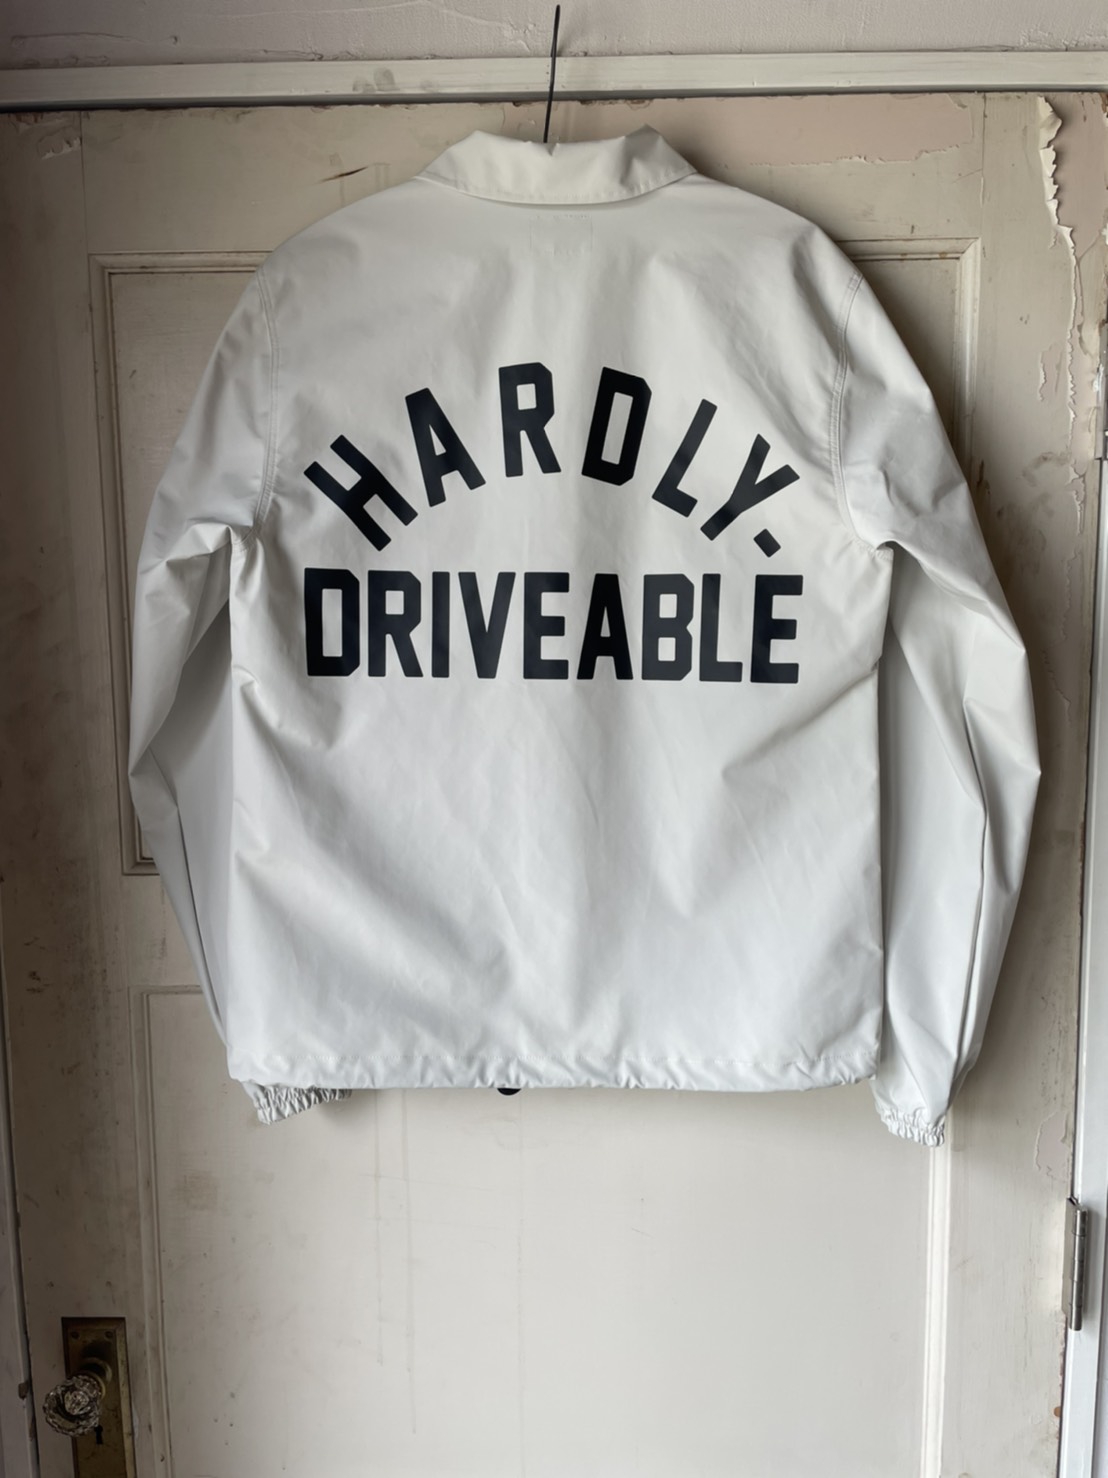 Three-layer coach jacket Ivory - HARDLY-DRIVEABLE